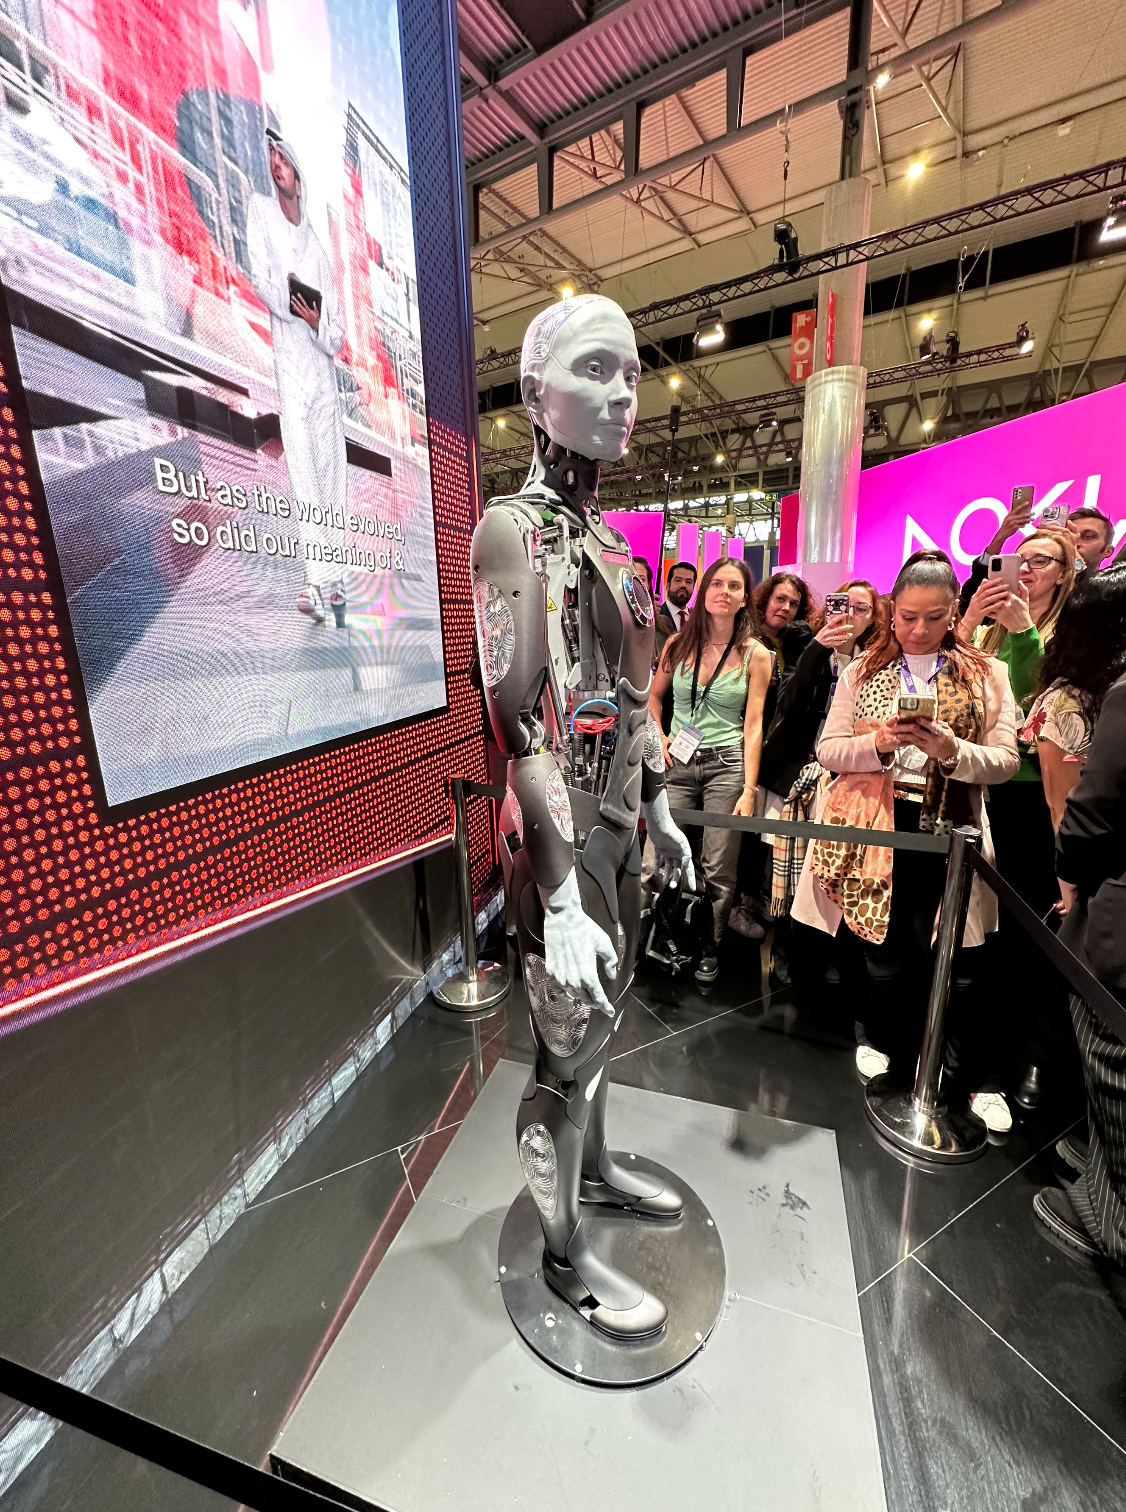 Ameca humanoid at MWC Barcelona